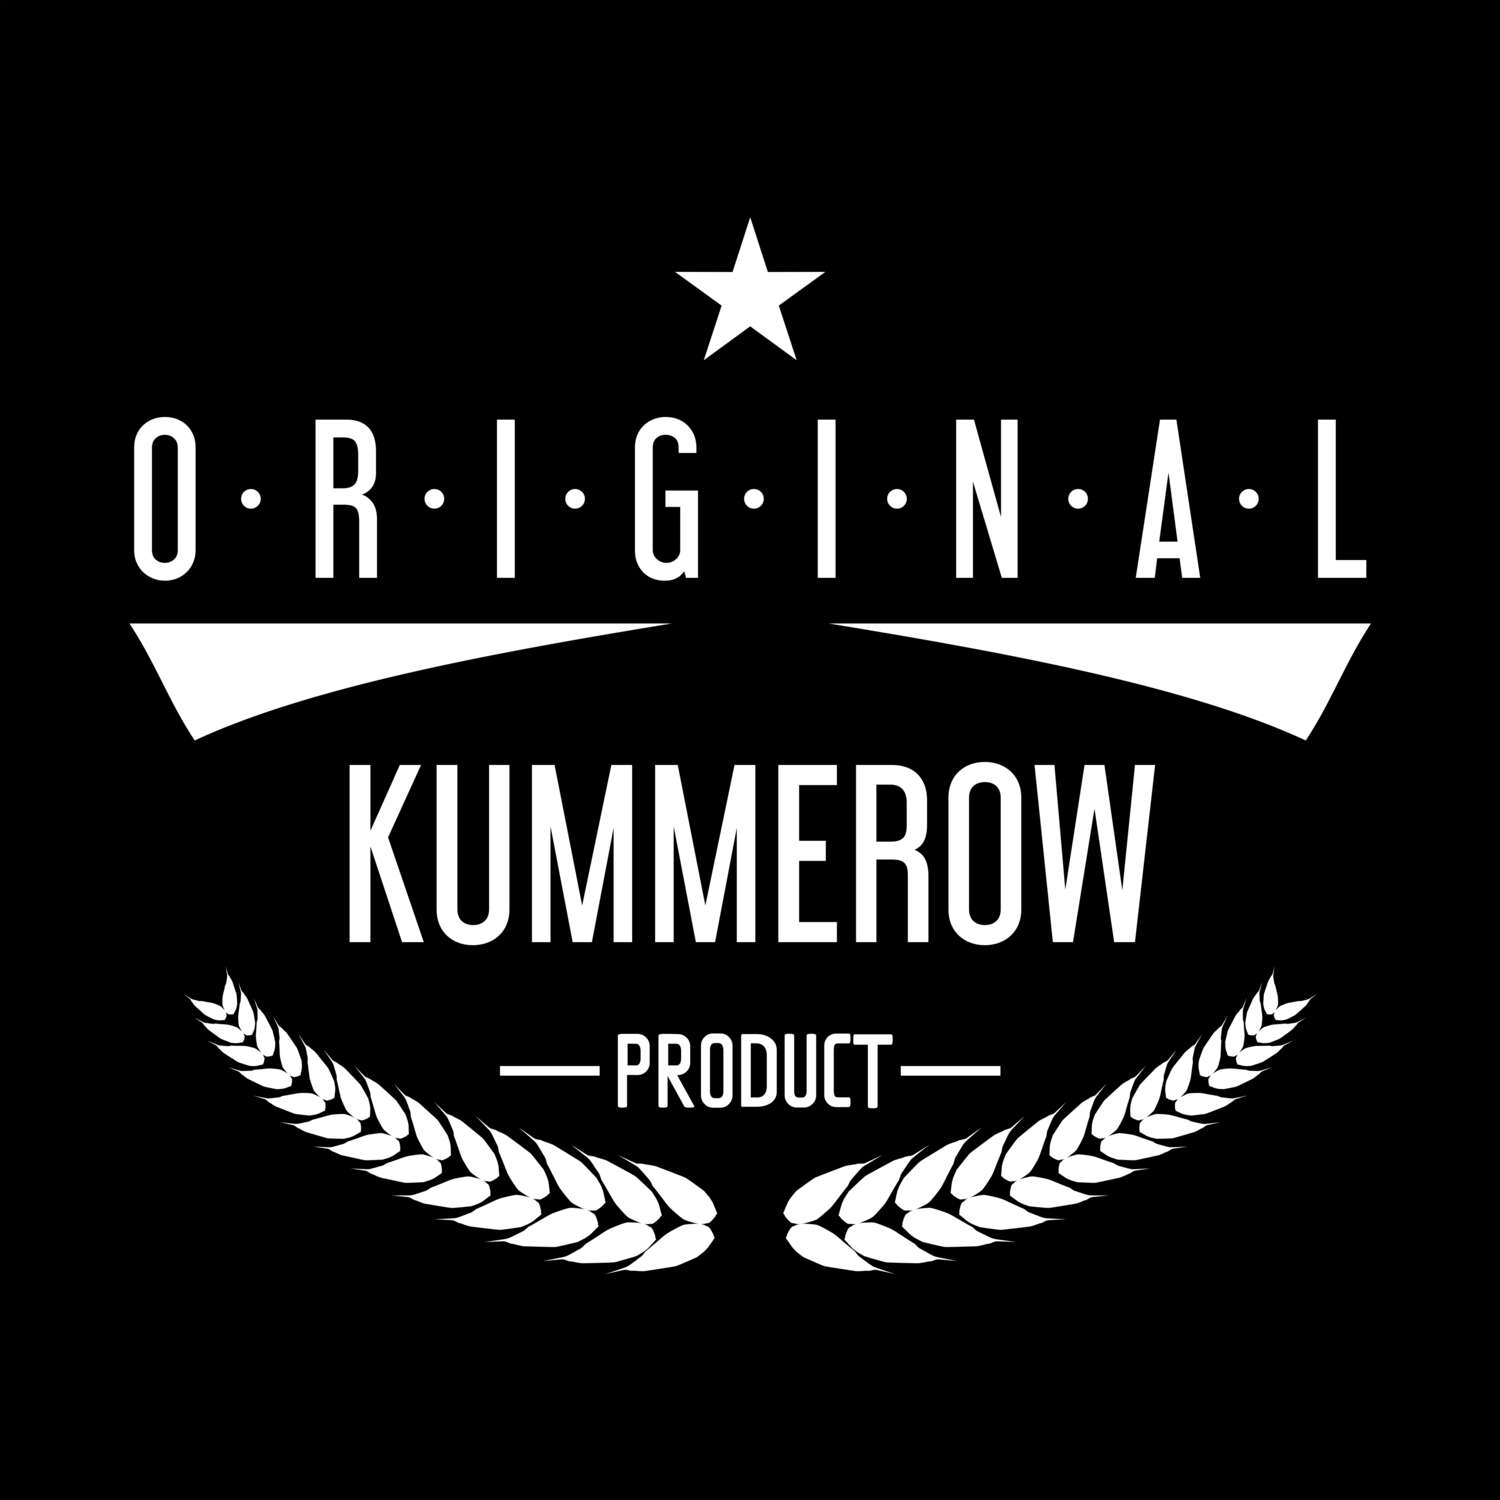 Kummerow T-Shirt »Original Product«